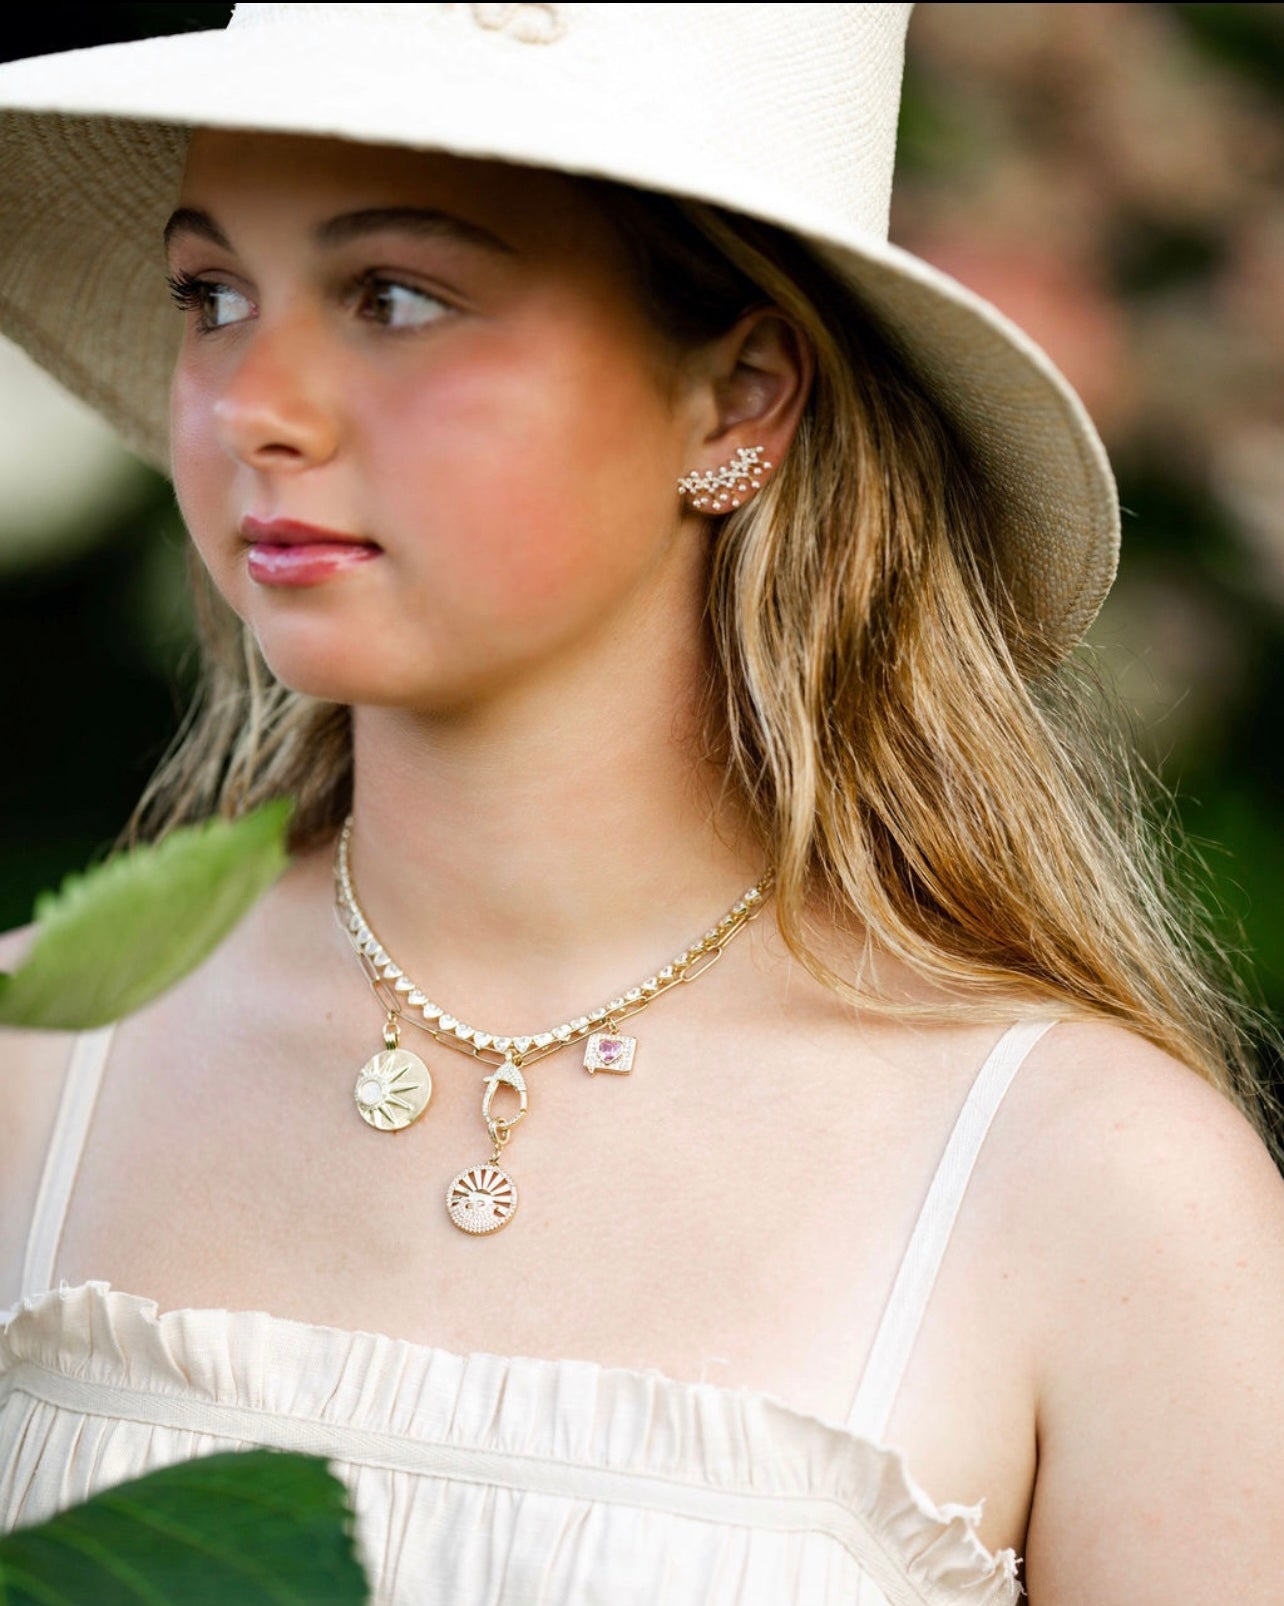 Alexa Elle's Signature Charm Necklace